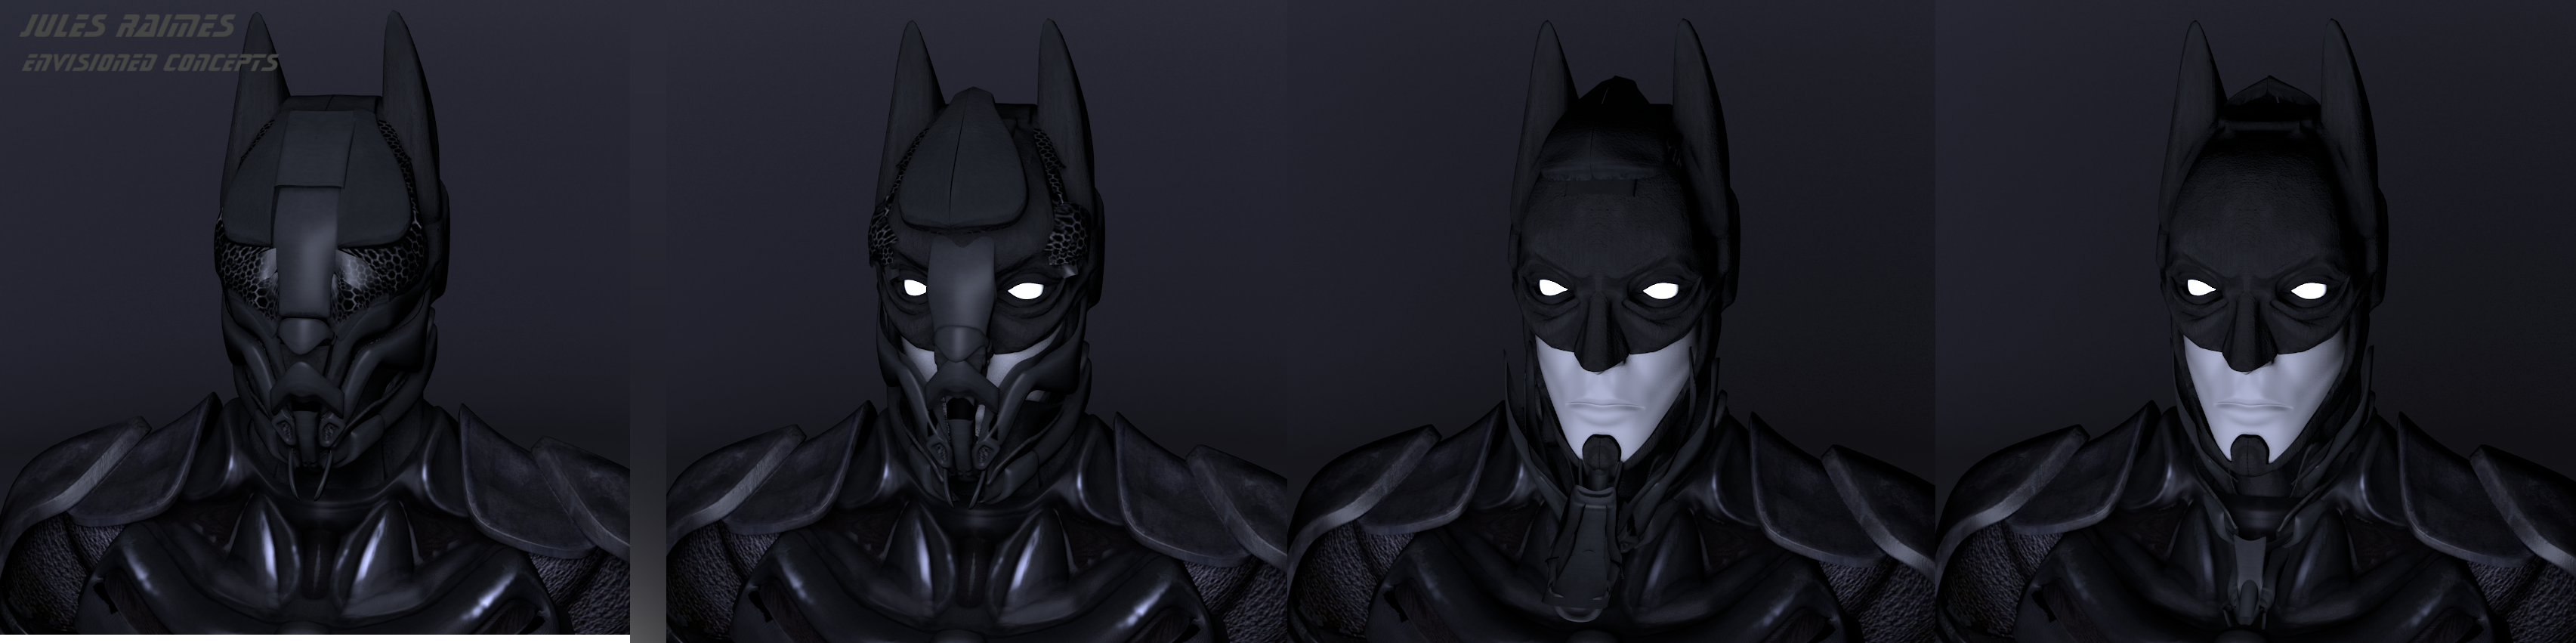 Batman Dark Knight Returns suit concept art – Jules Spaniard Raimes